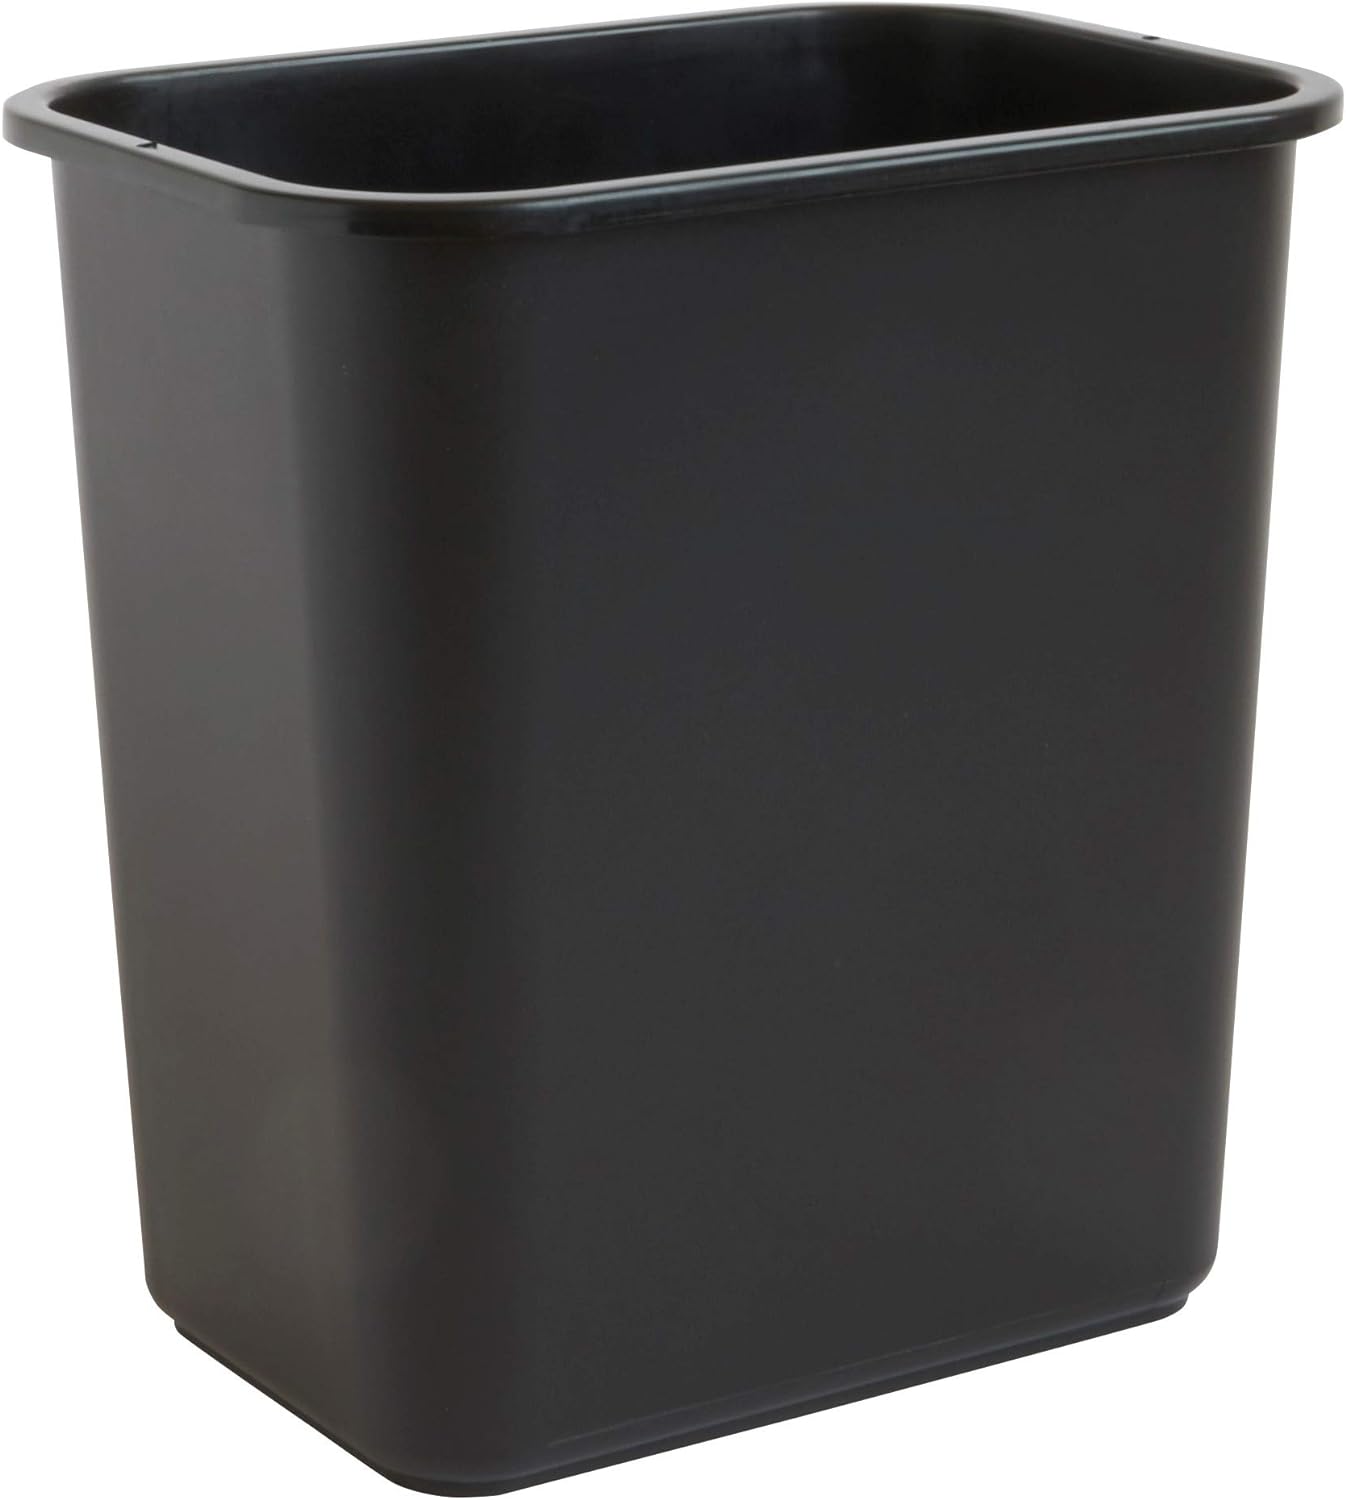 Plastic Trash Can Rubbermaid Garbage Recycle Waste Bin 7 Gal Black Home Office 